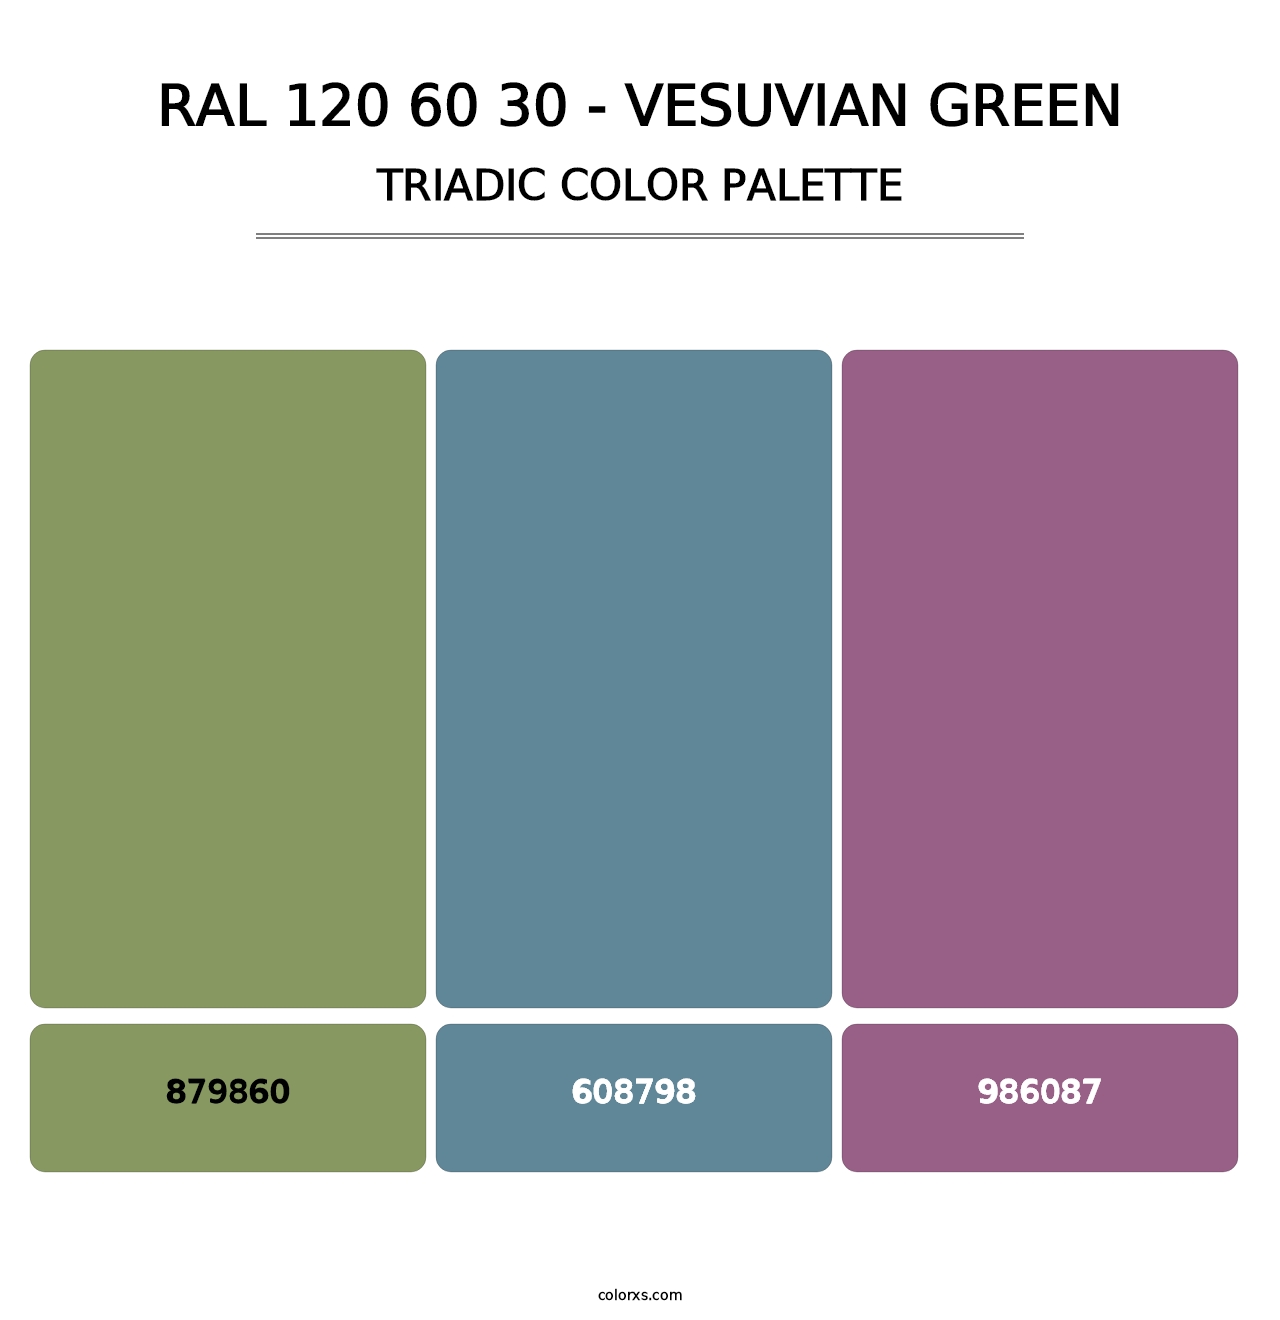 RAL 120 60 30 - Vesuvian Green - Triadic Color Palette